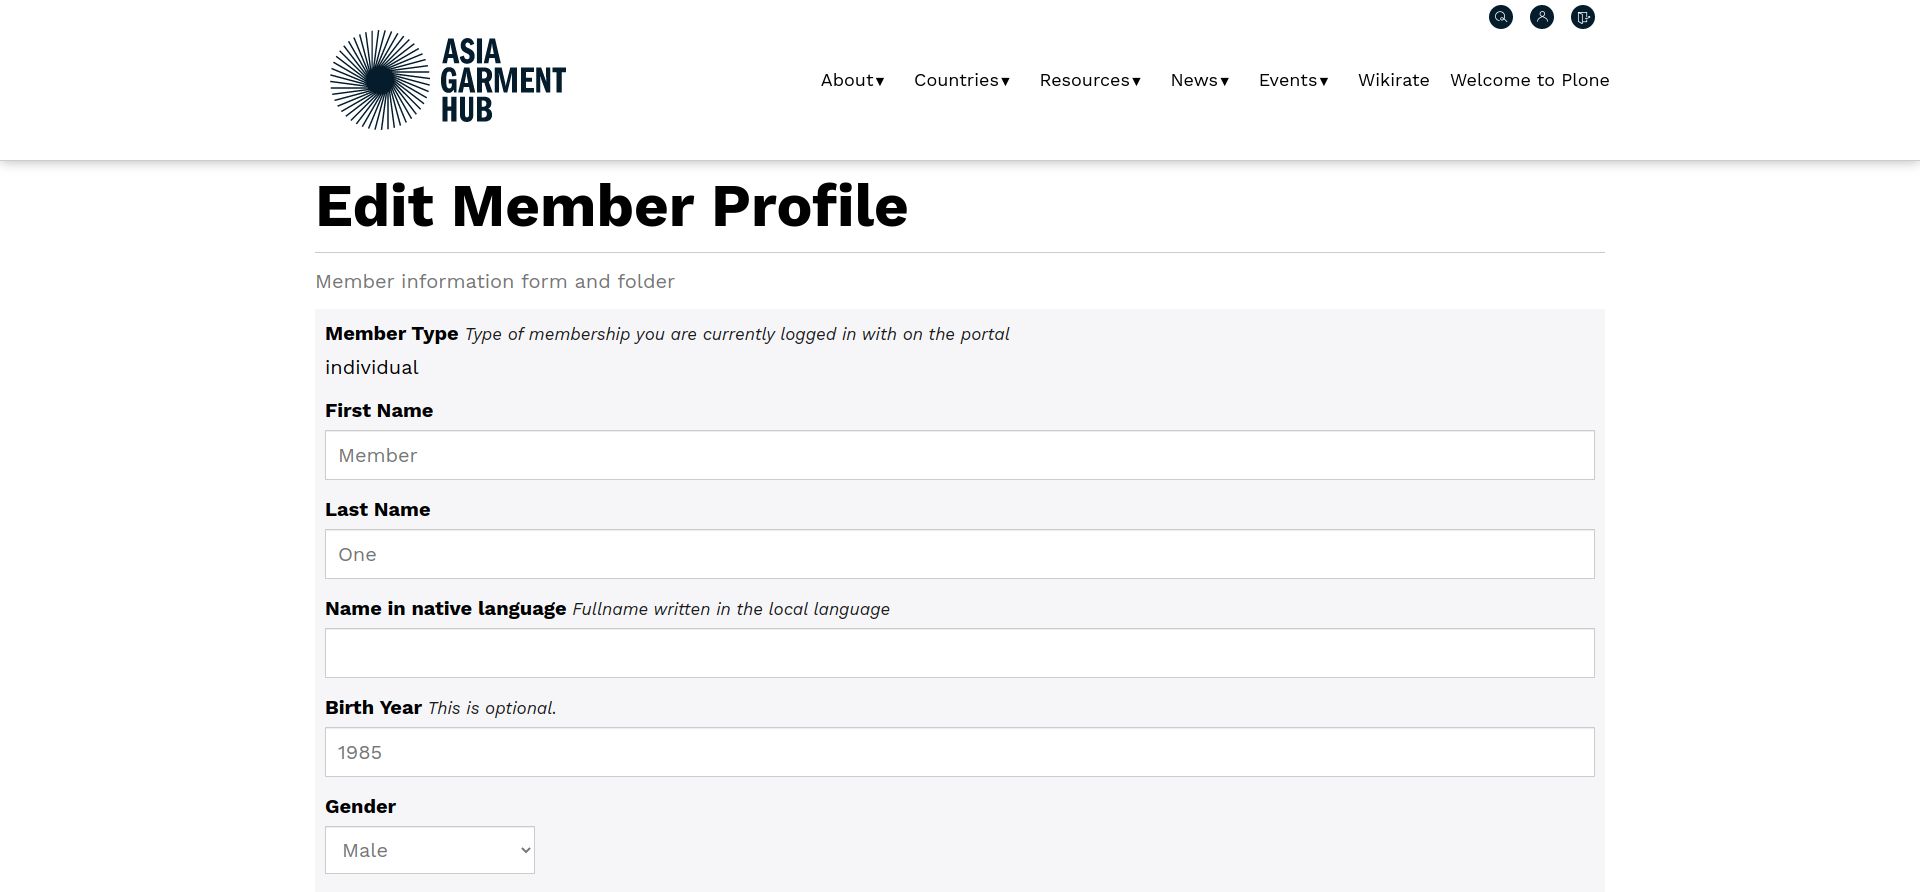 aghub-profile-form.jpg